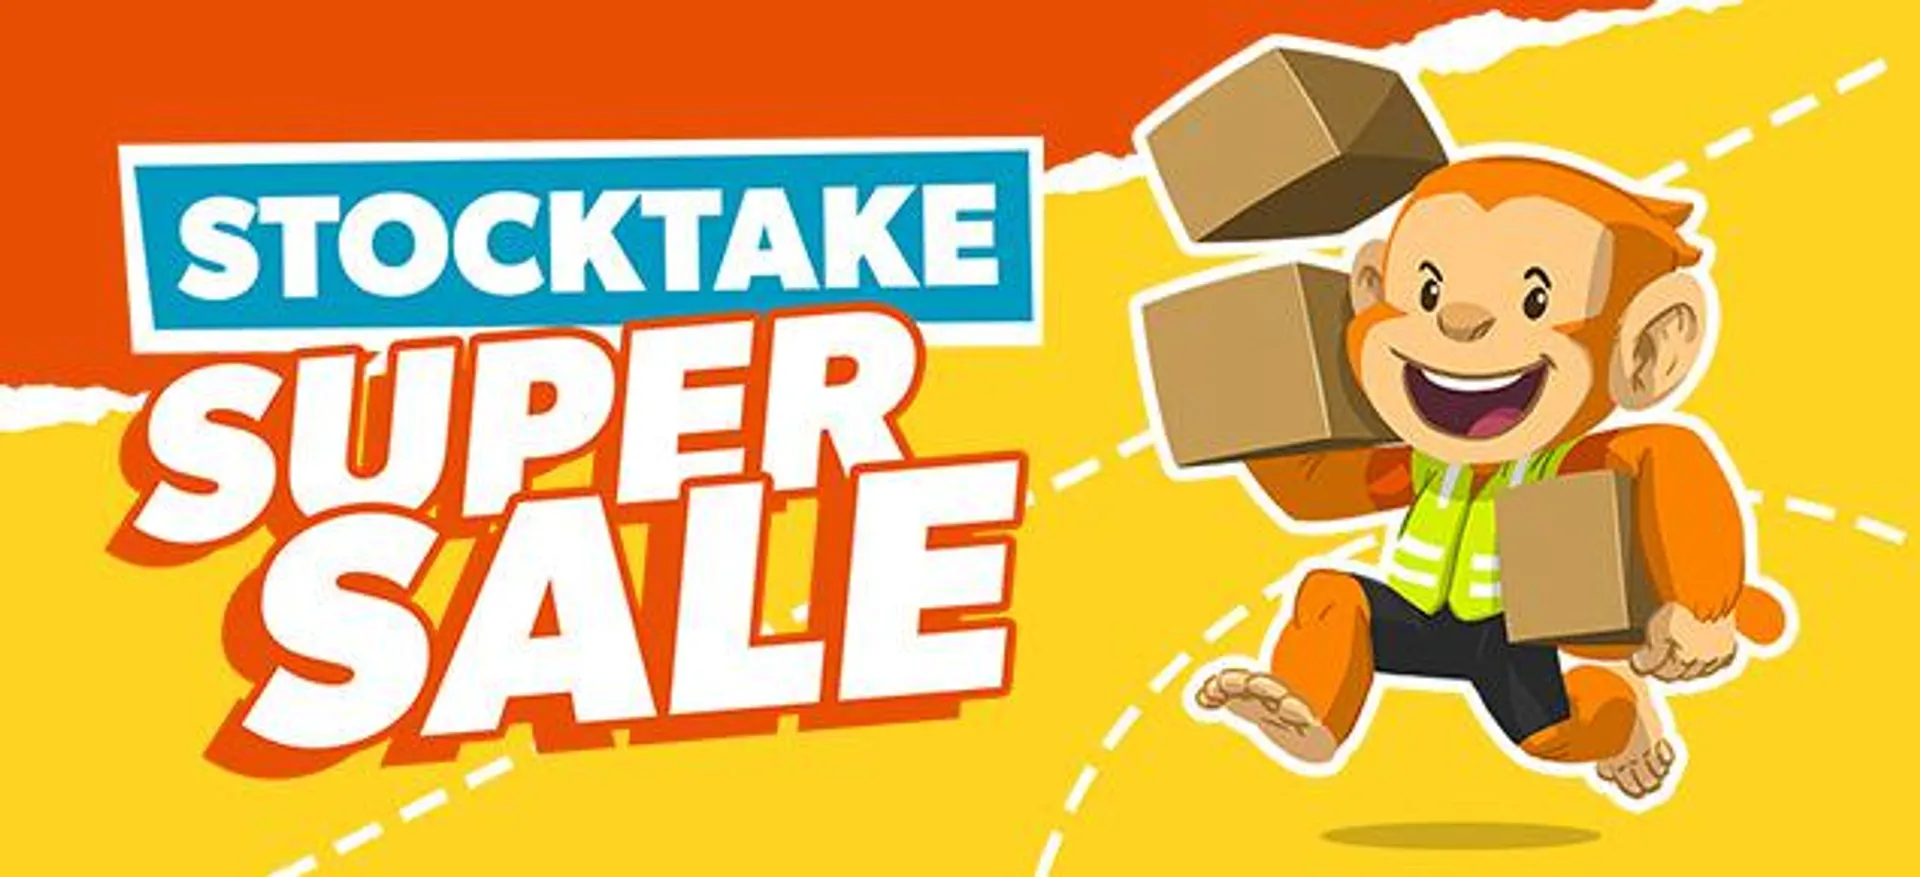 Stocktake Super Sale!